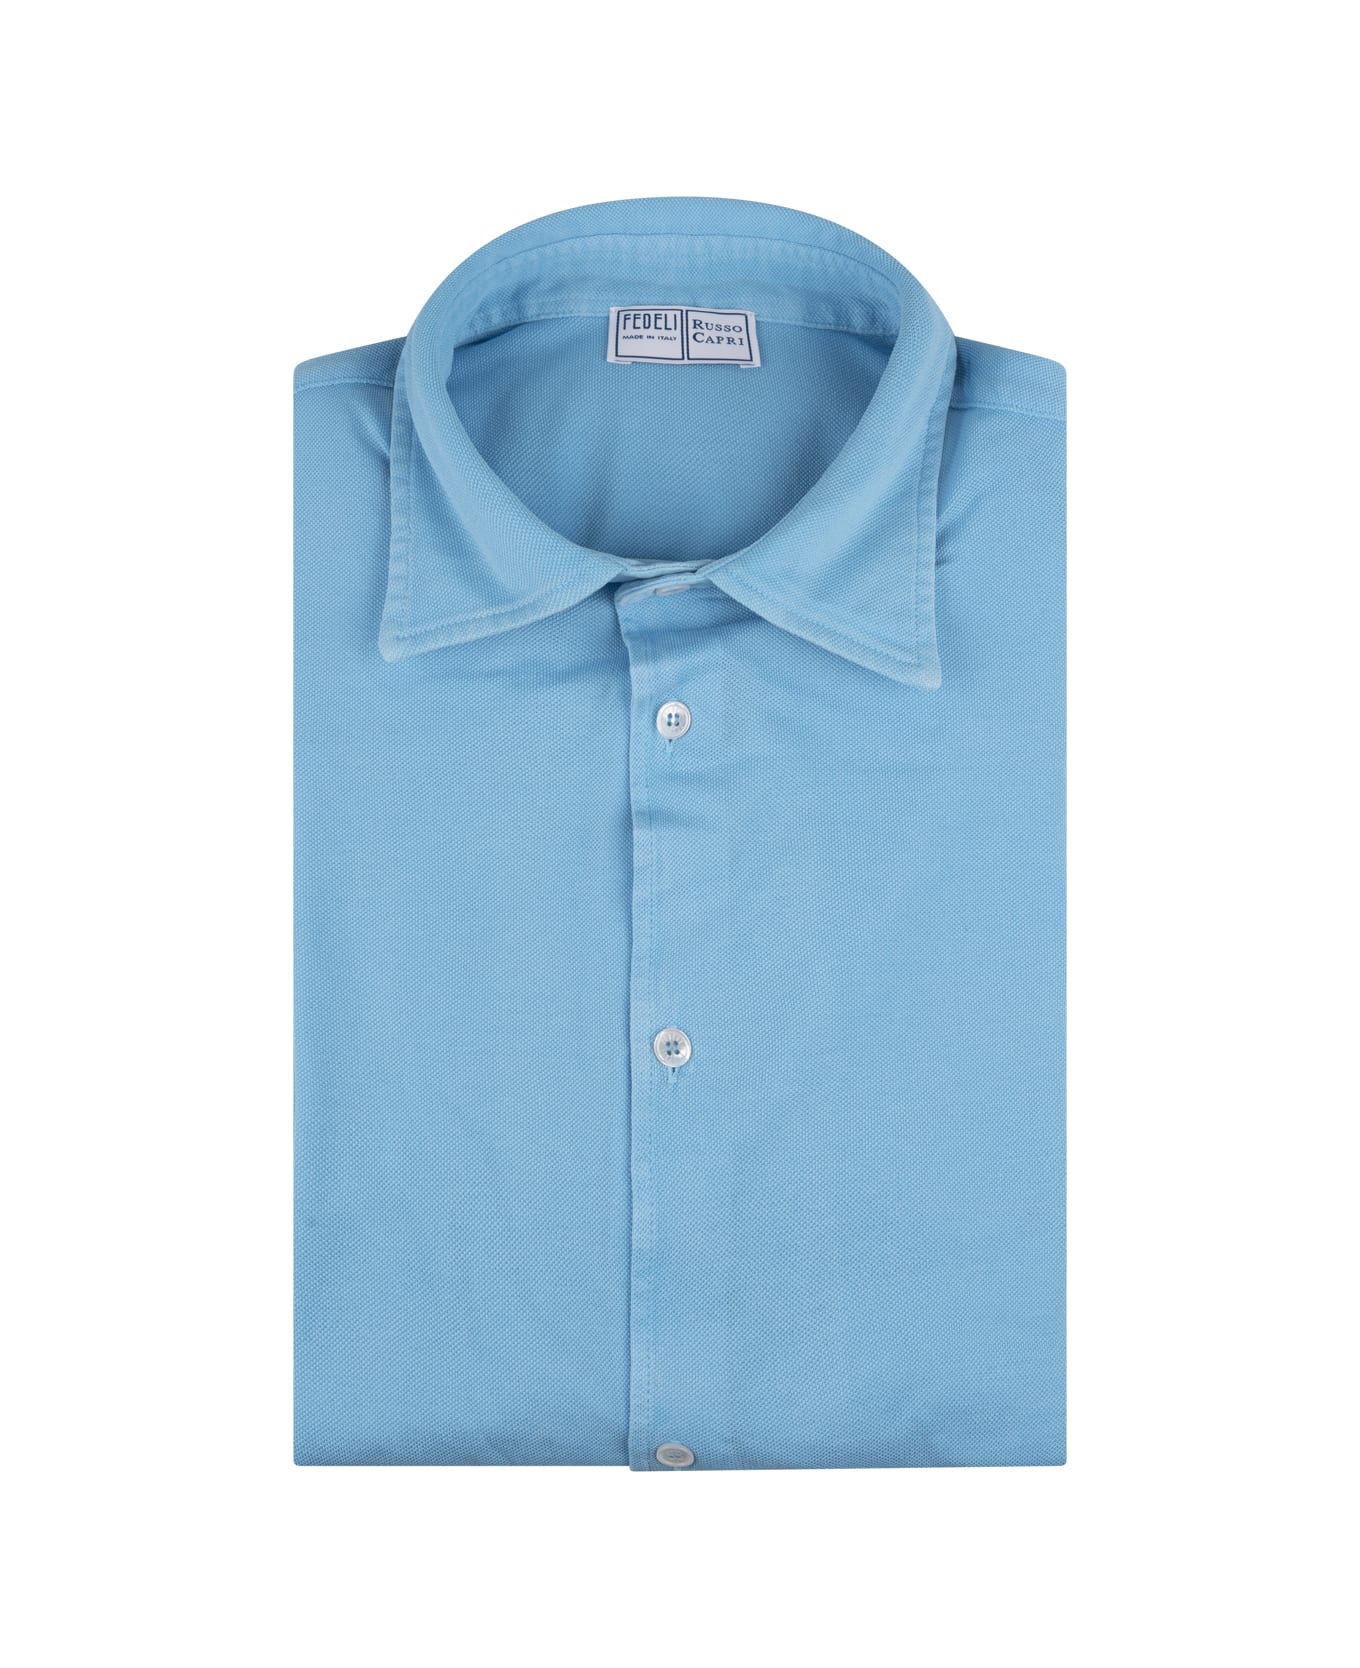 Fedeli Teorema Shirt In Sky Blue Cotton Piqué - Blue